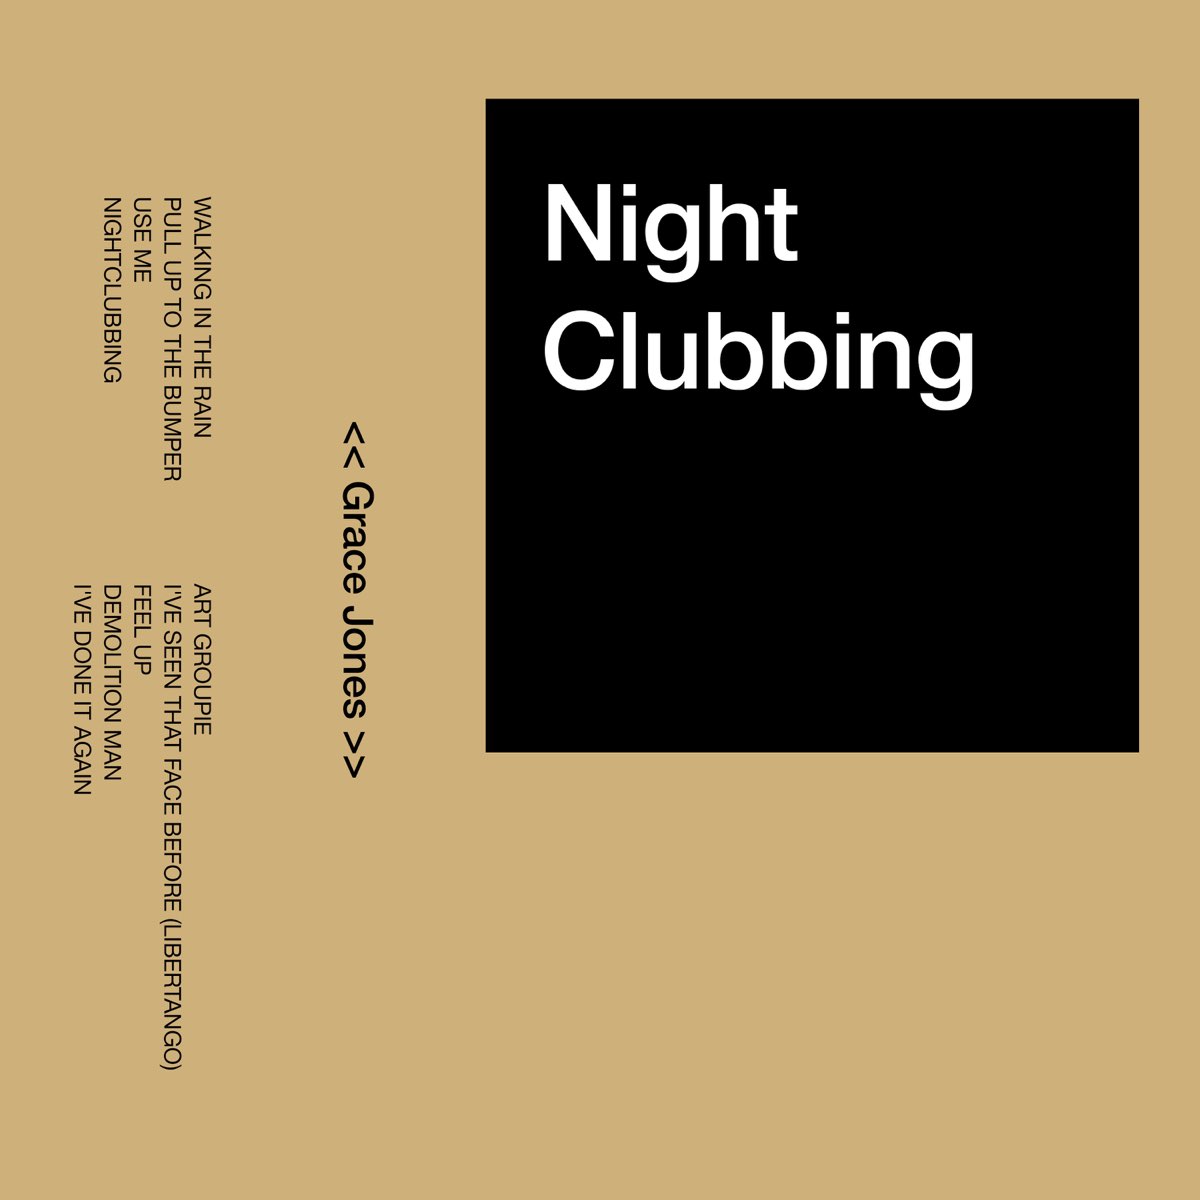 Night Club Kings - Single - Album by OverLine - Apple Music